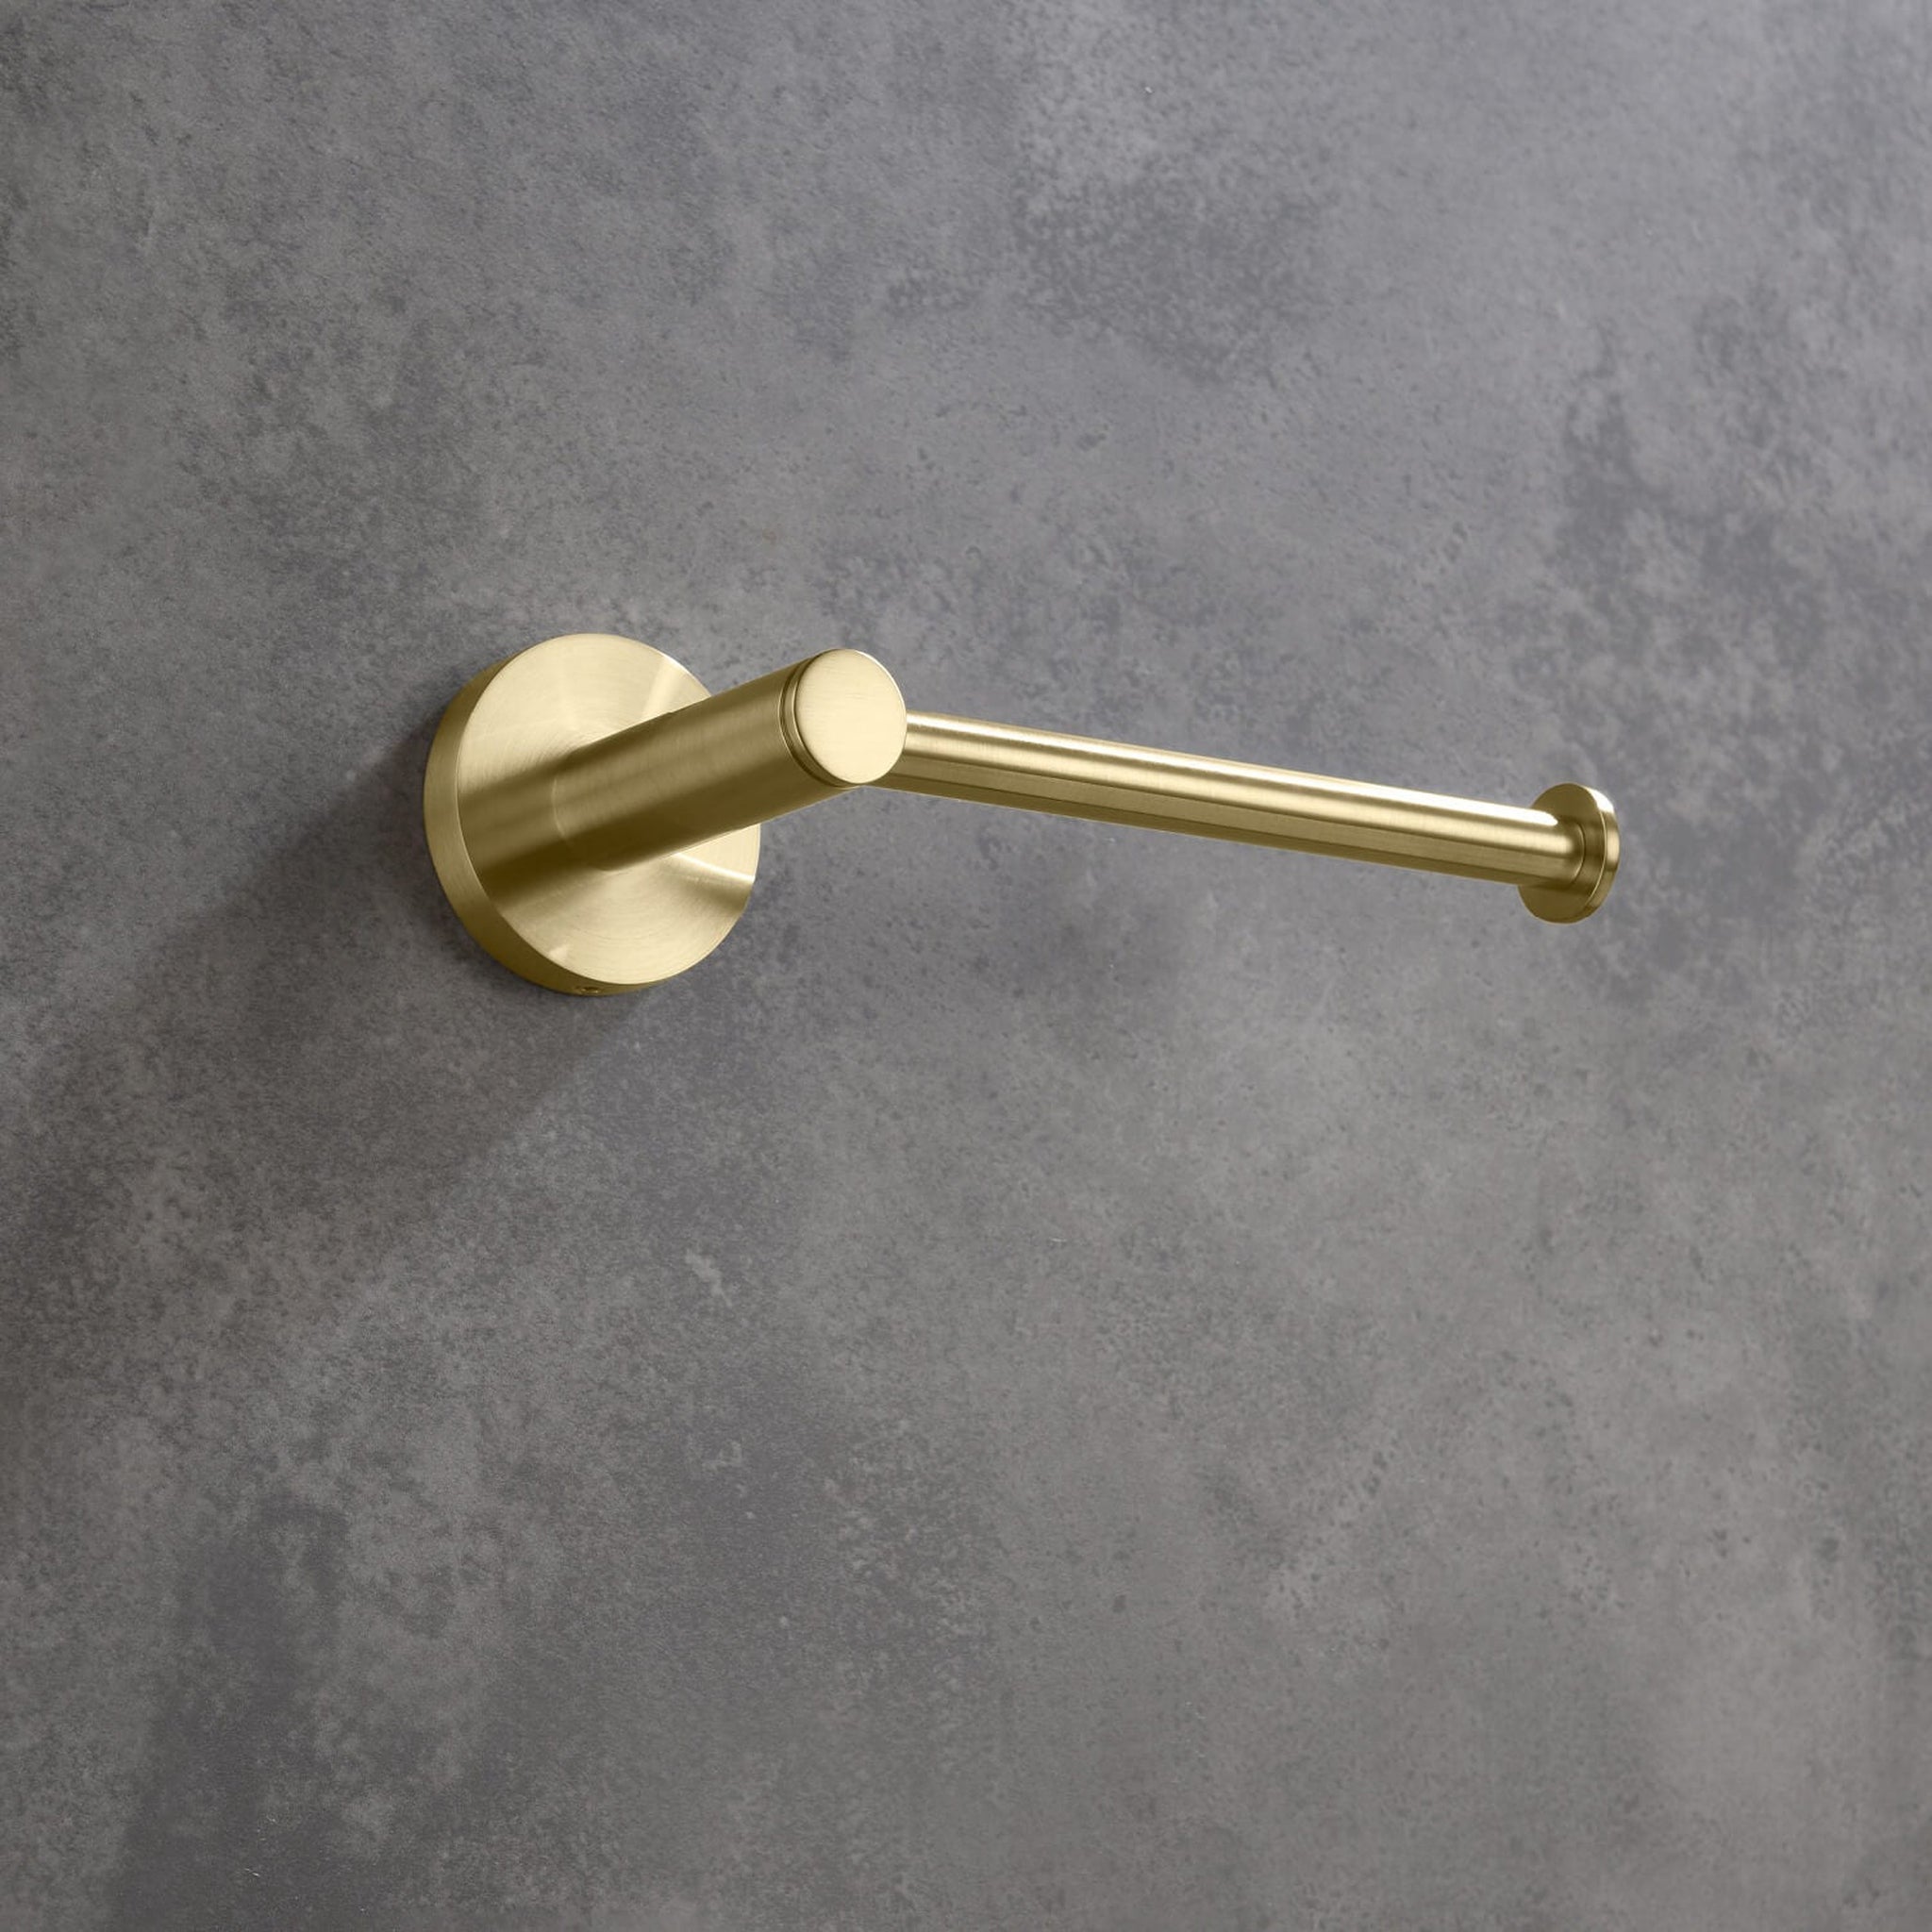 KIBI, KIBI Circular Brass Bathroom Tissue Holder in Brushed Gold Finish